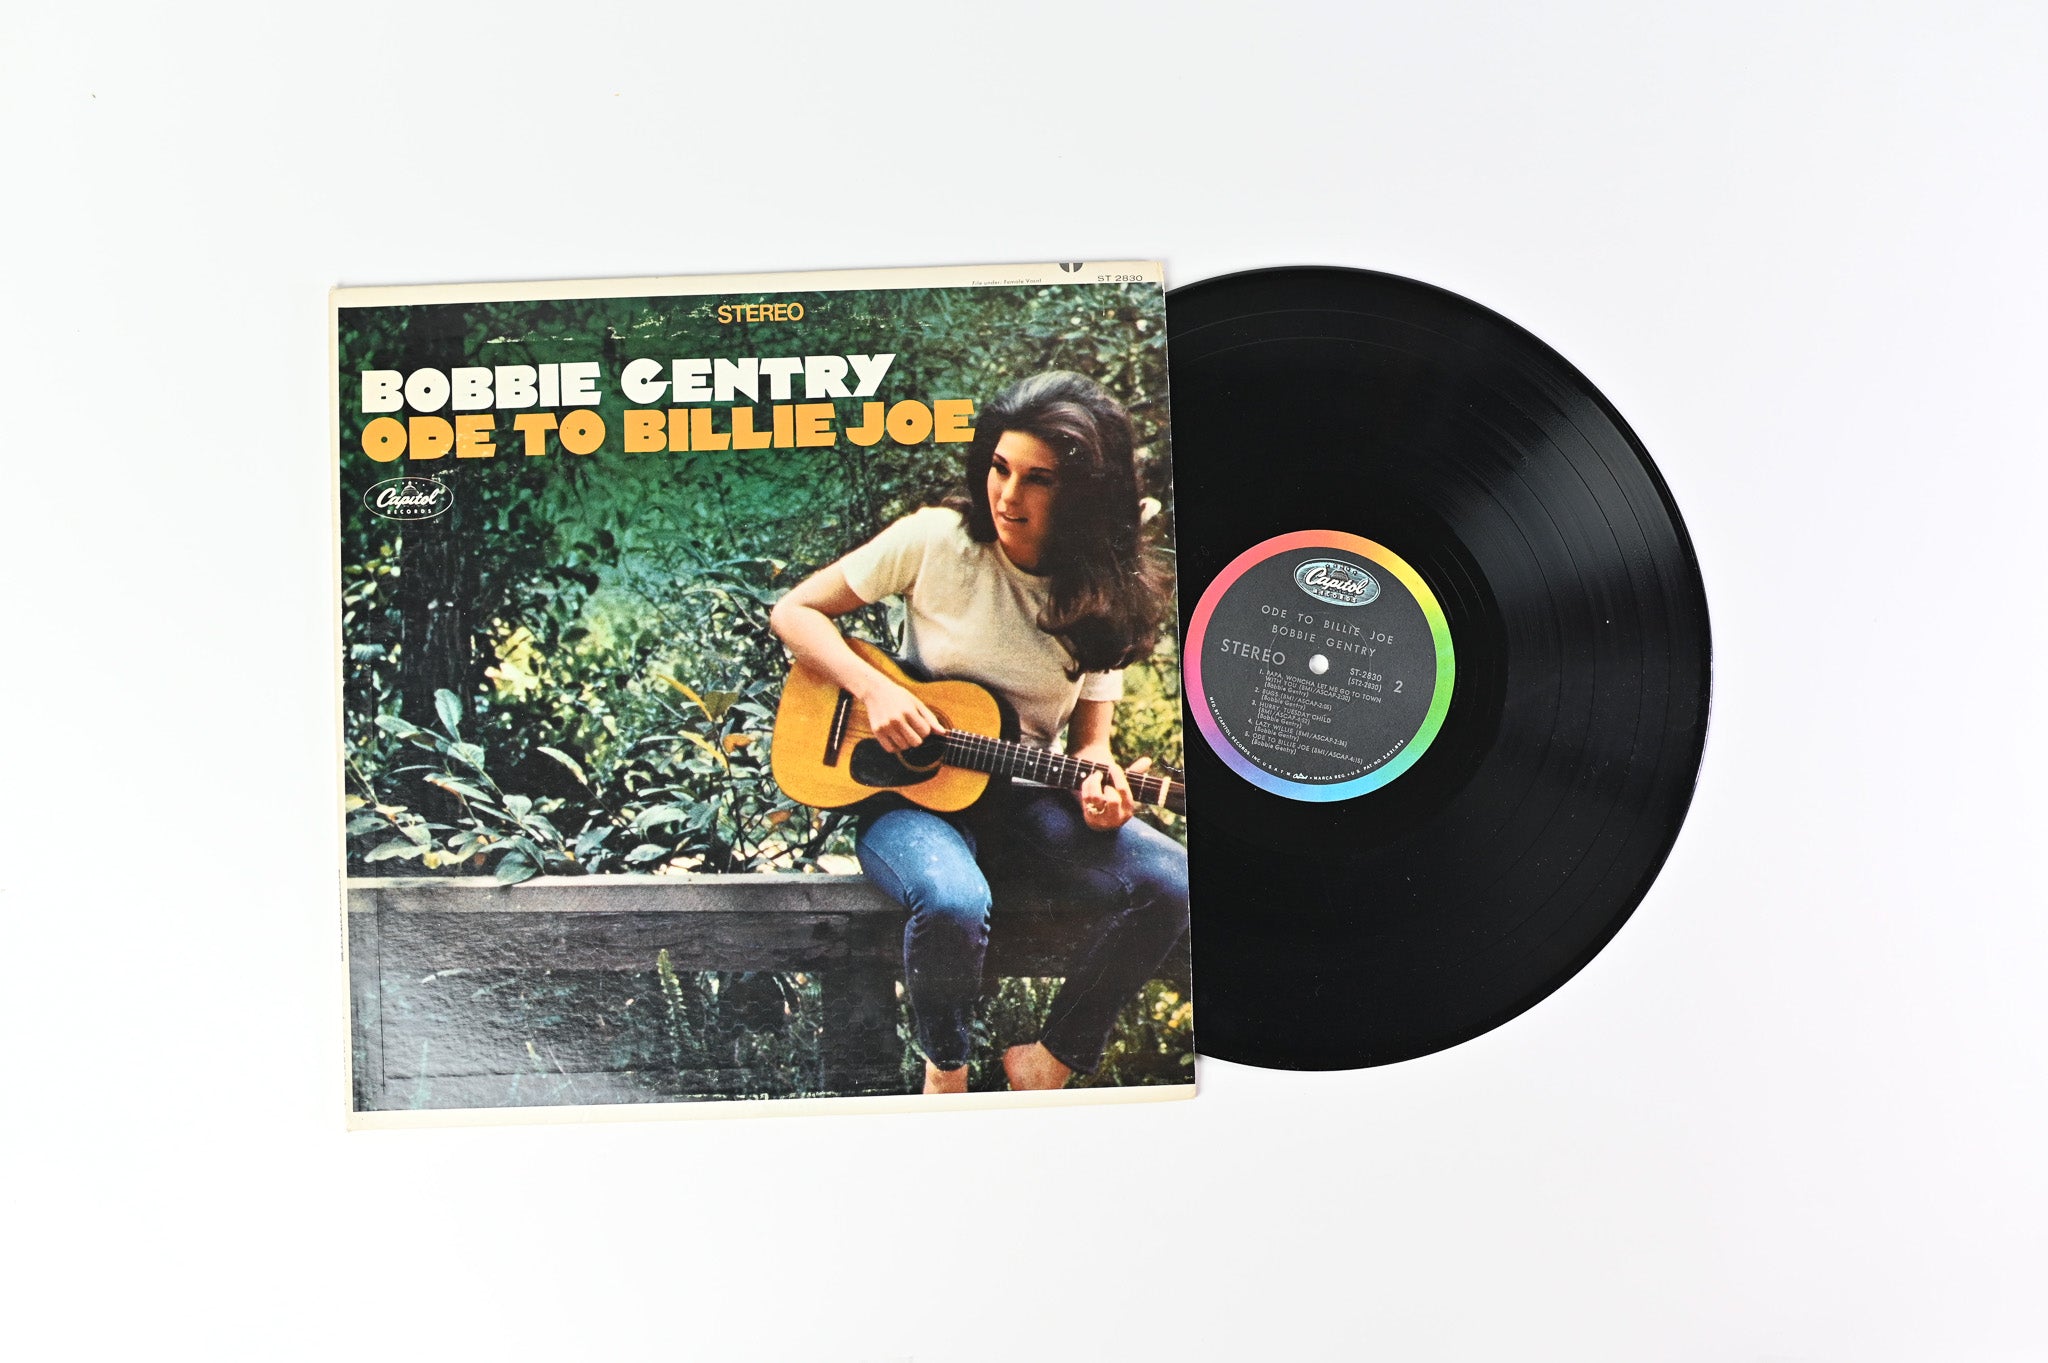 Bobbie Gentry - Ode To Billie Joe on Capitol